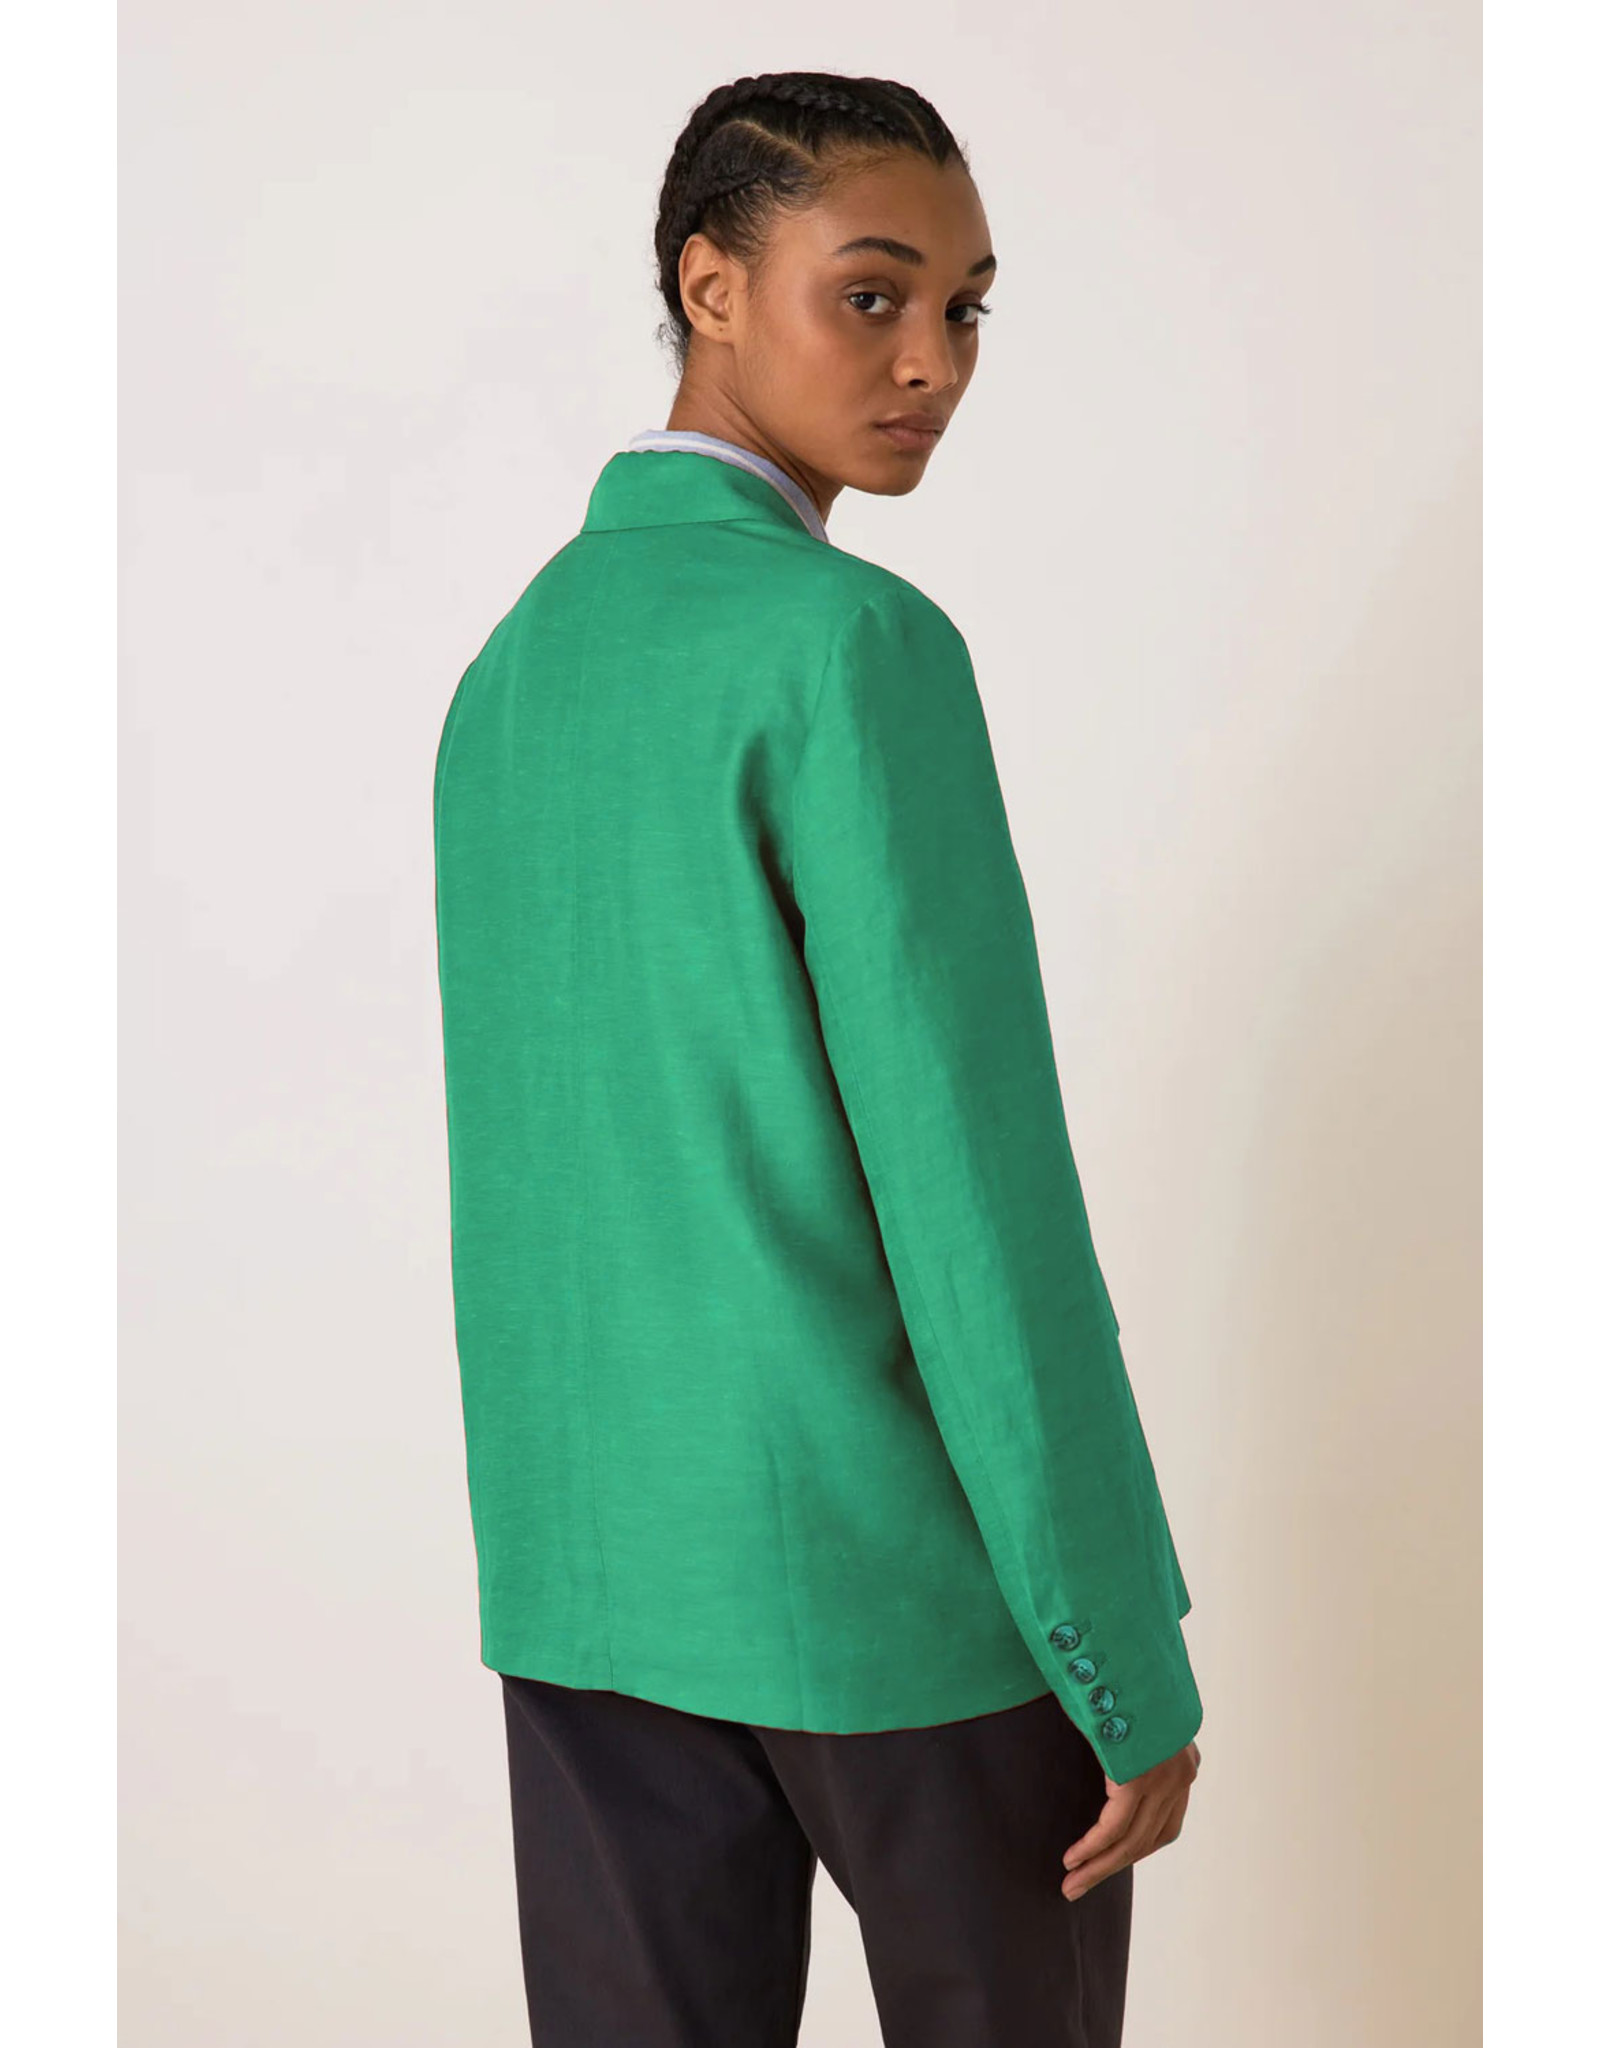 Leon & Harper Venice Jacket Green